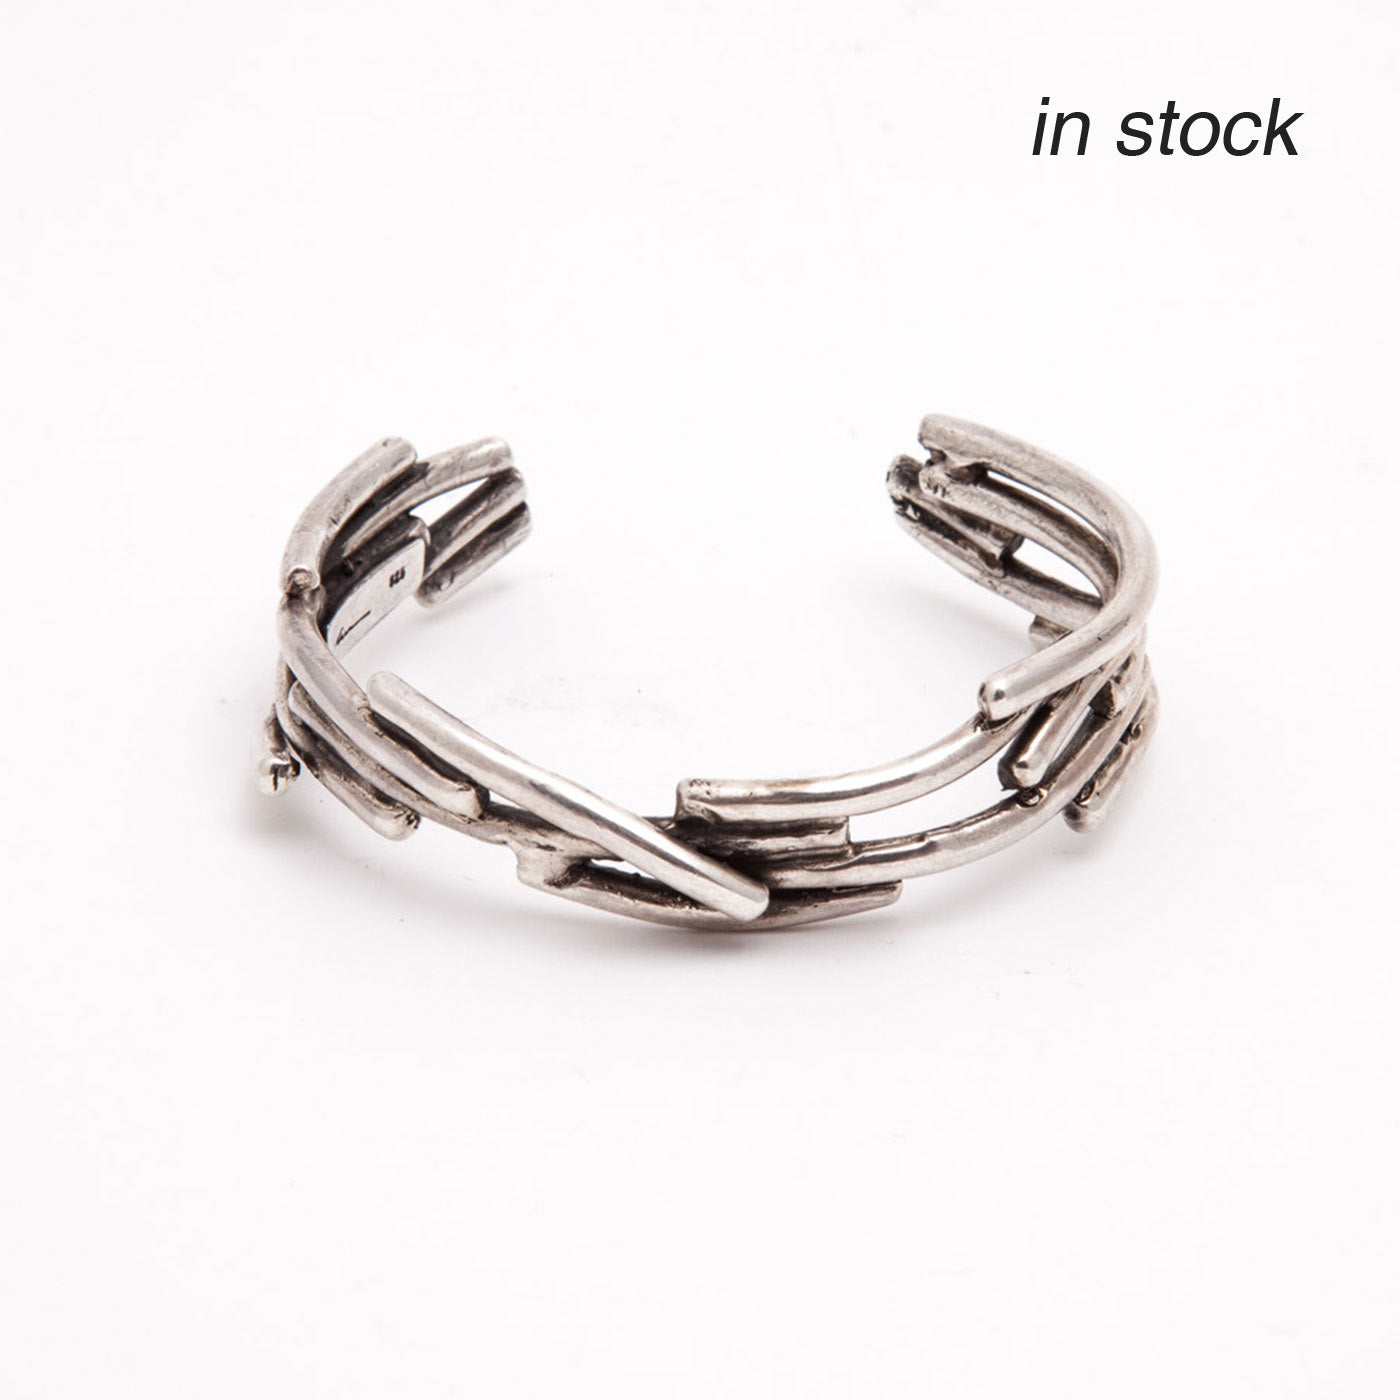 bracelet petite flow silver product view innan jewellery in stock